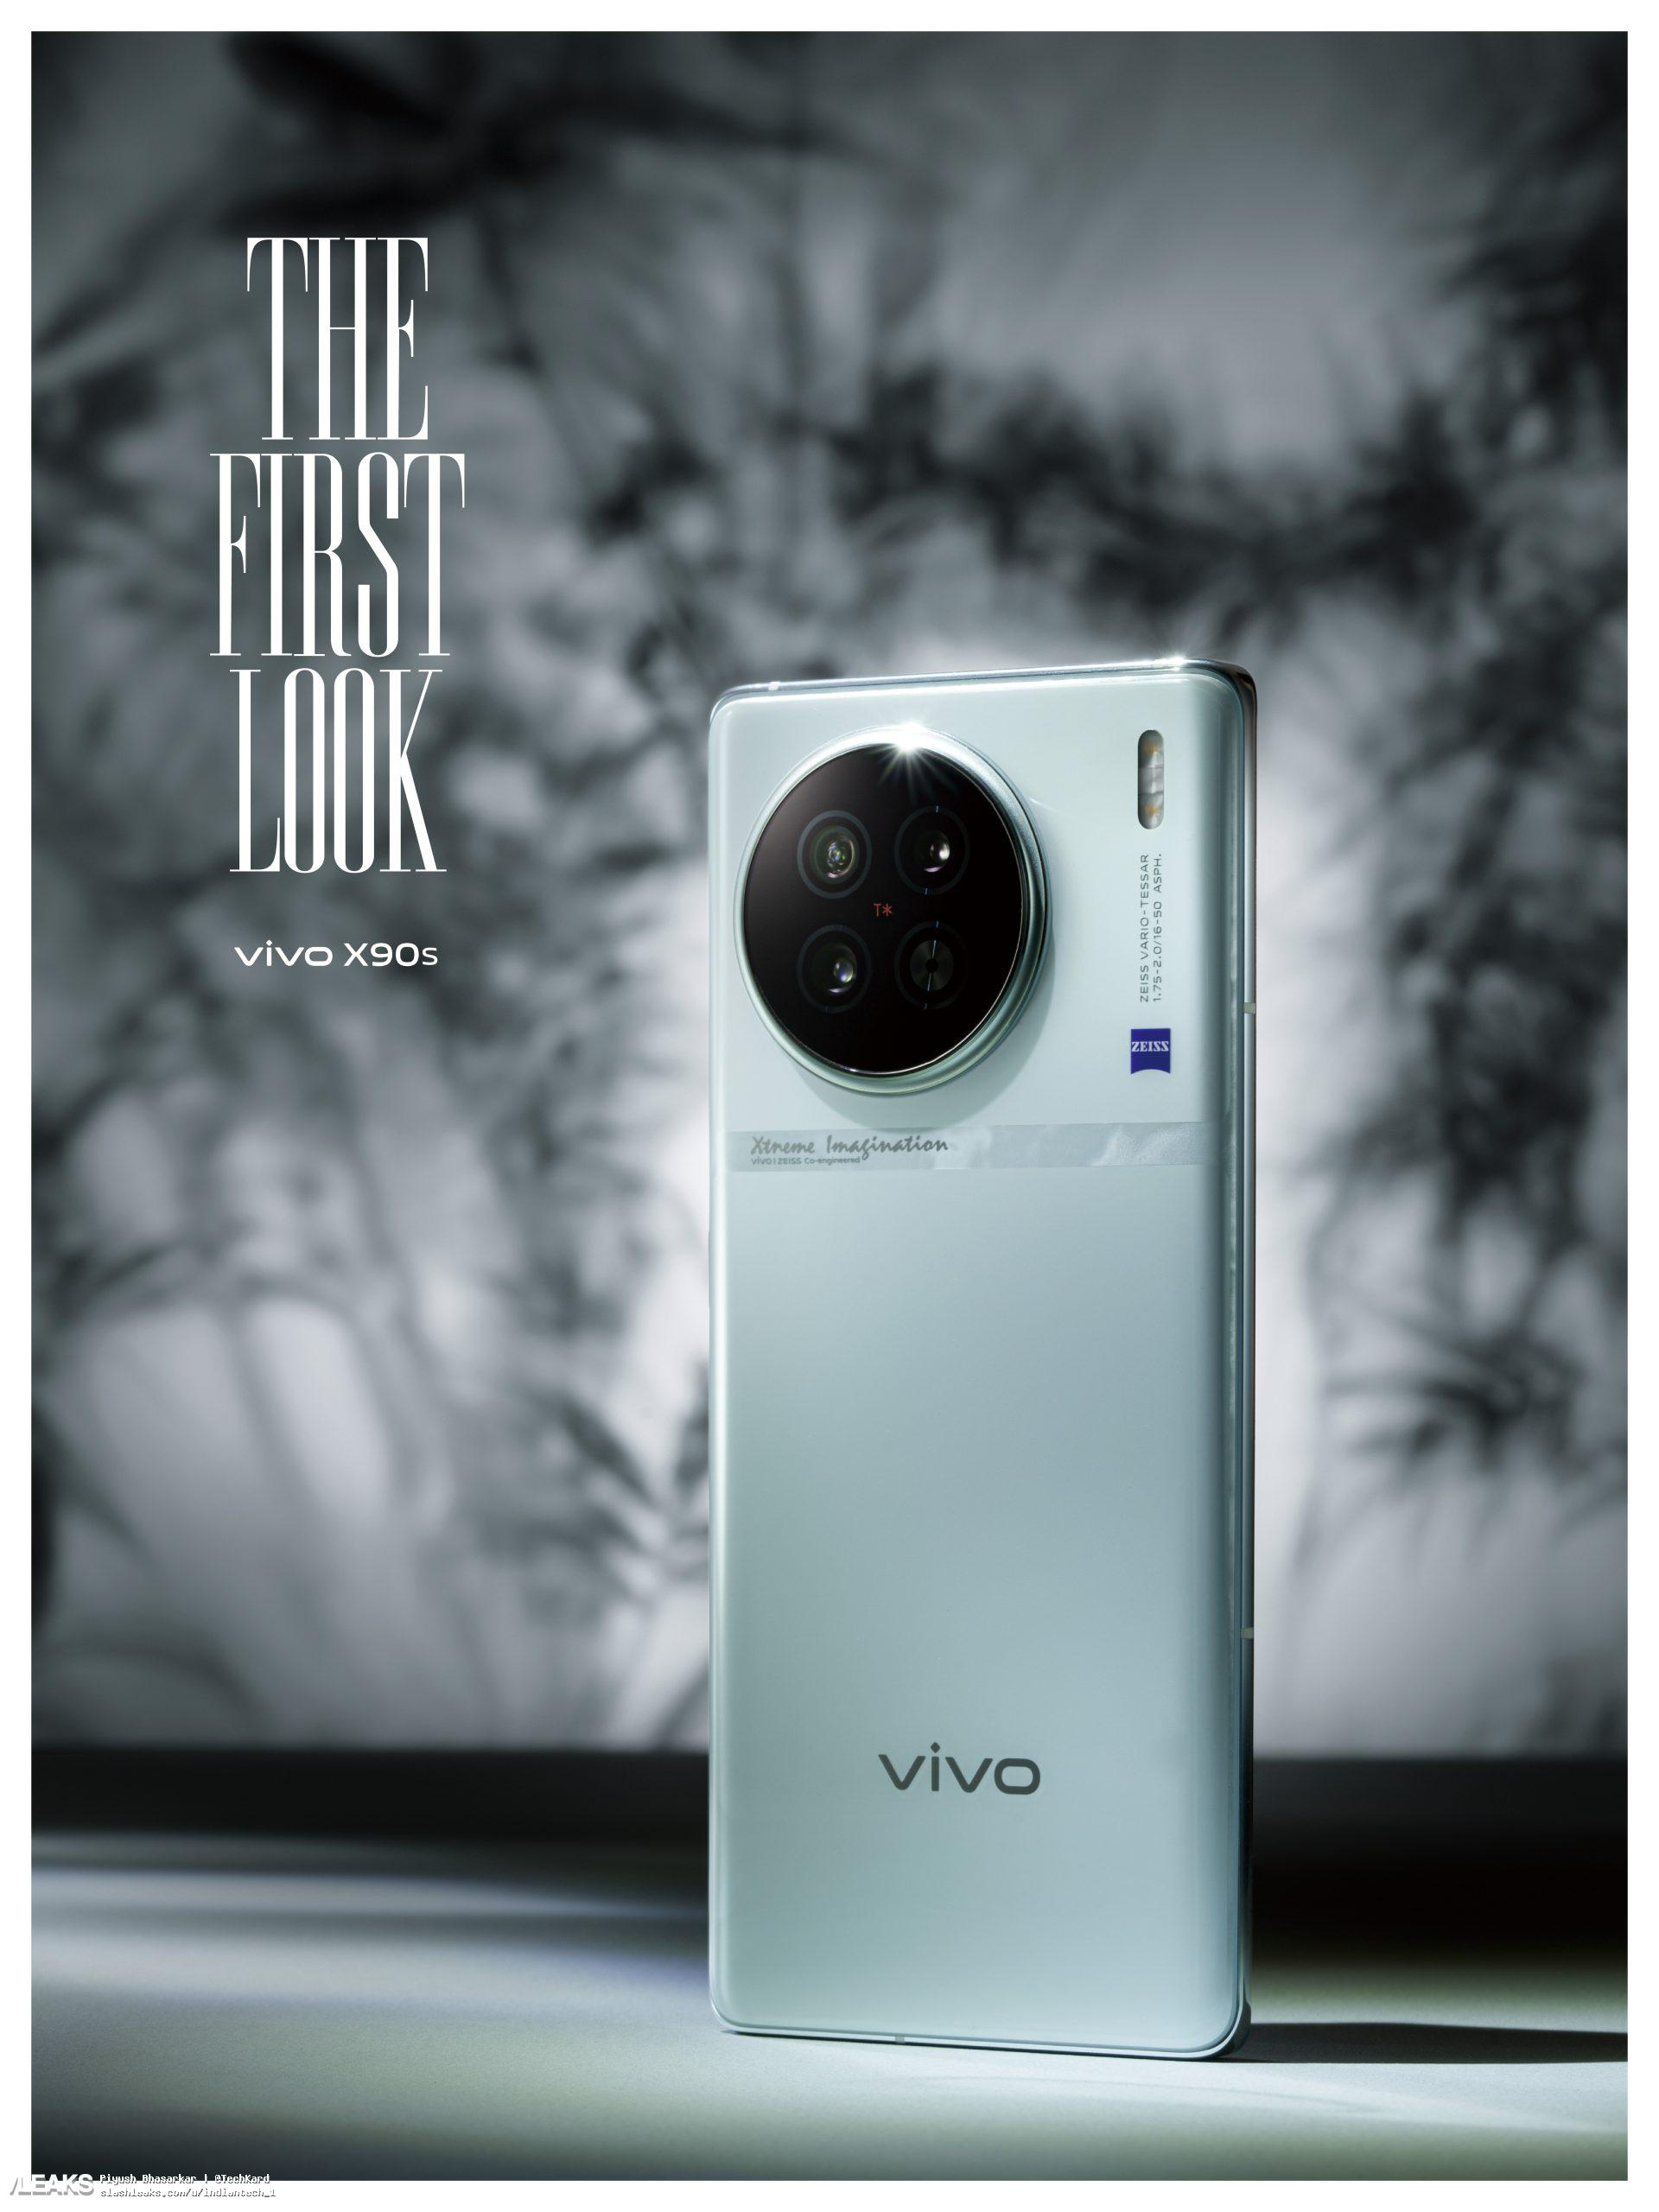 Vivo X90S Promotional Images